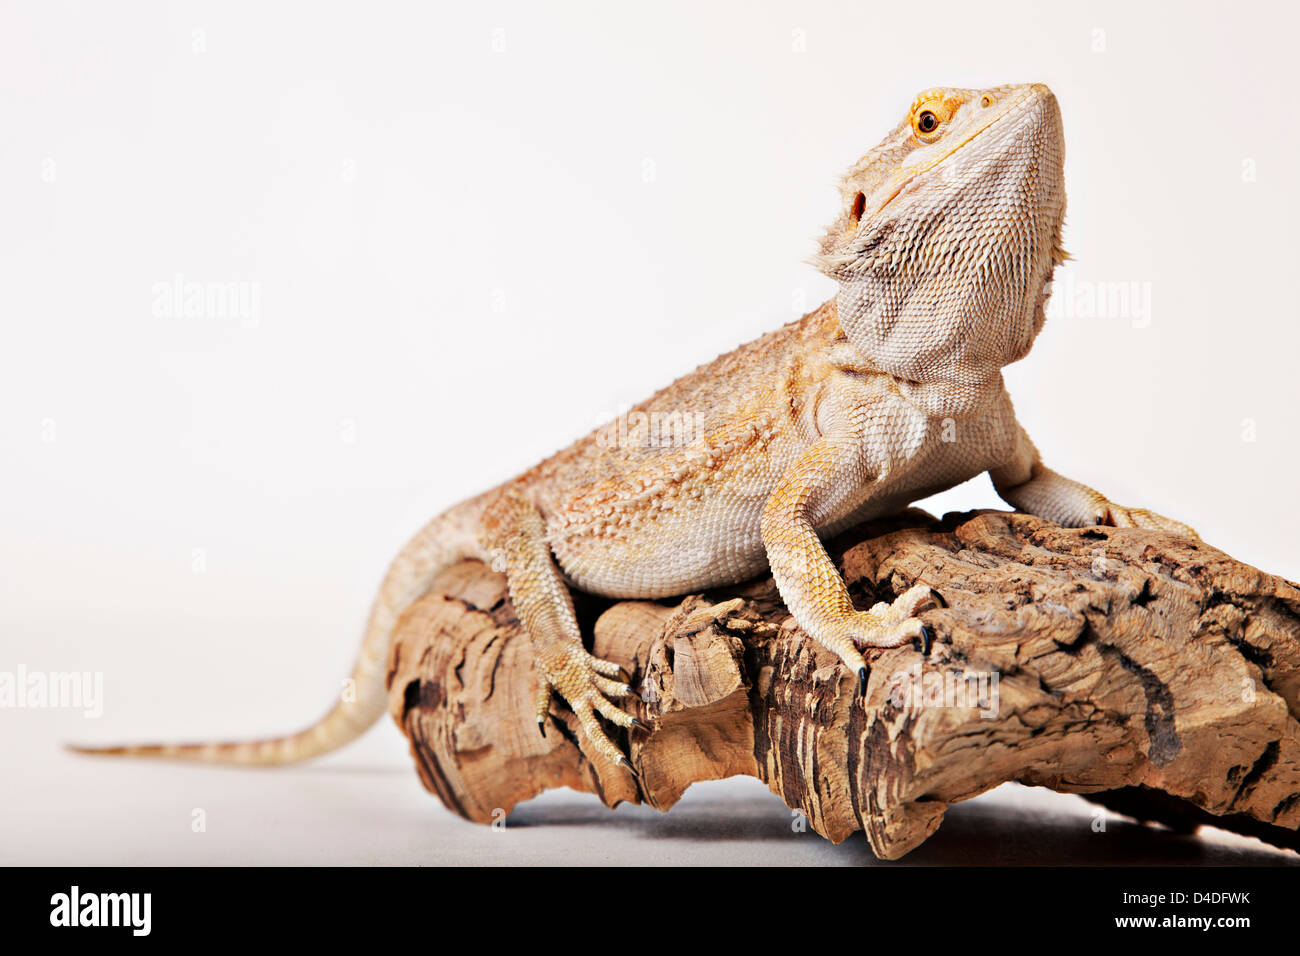 Lizard crawling on log Stock Photo